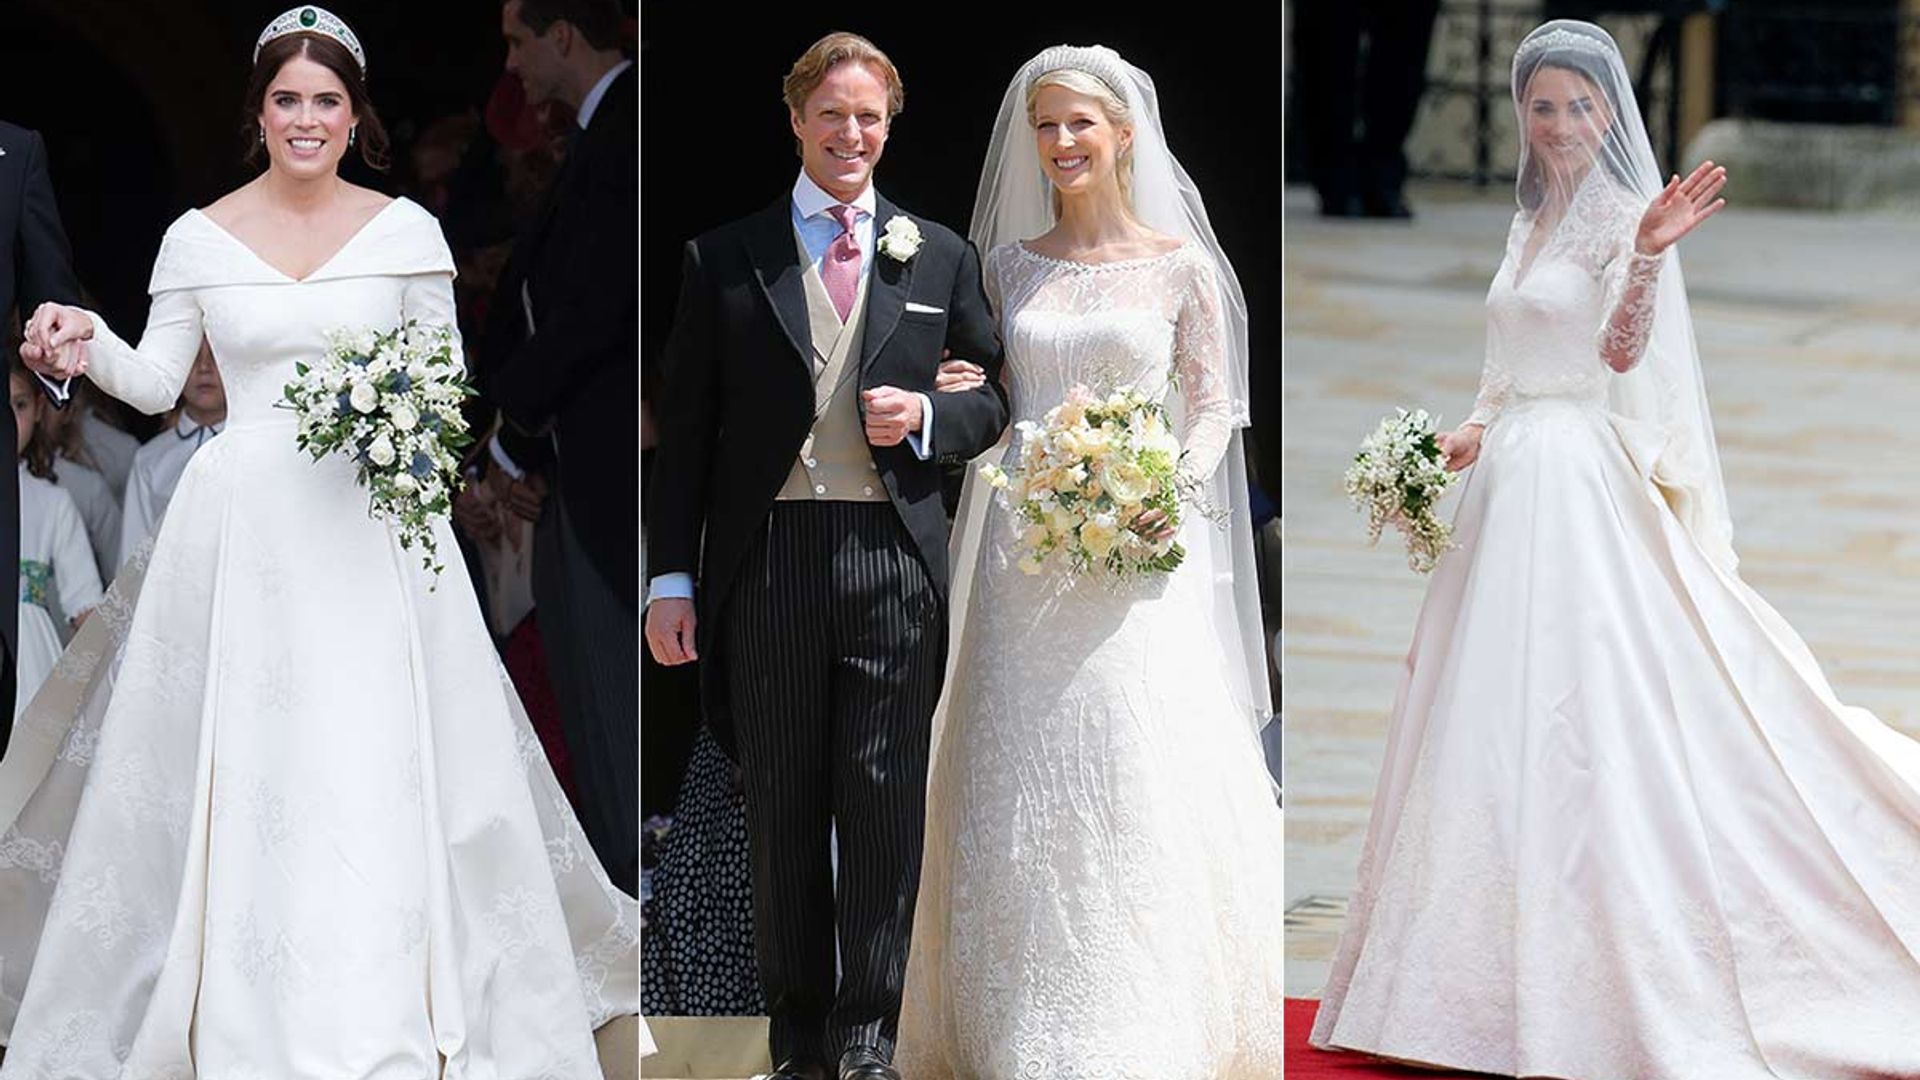 Meet the royal wedding dress designers behind Lady Gabriella, Meghan & Kate's gowns